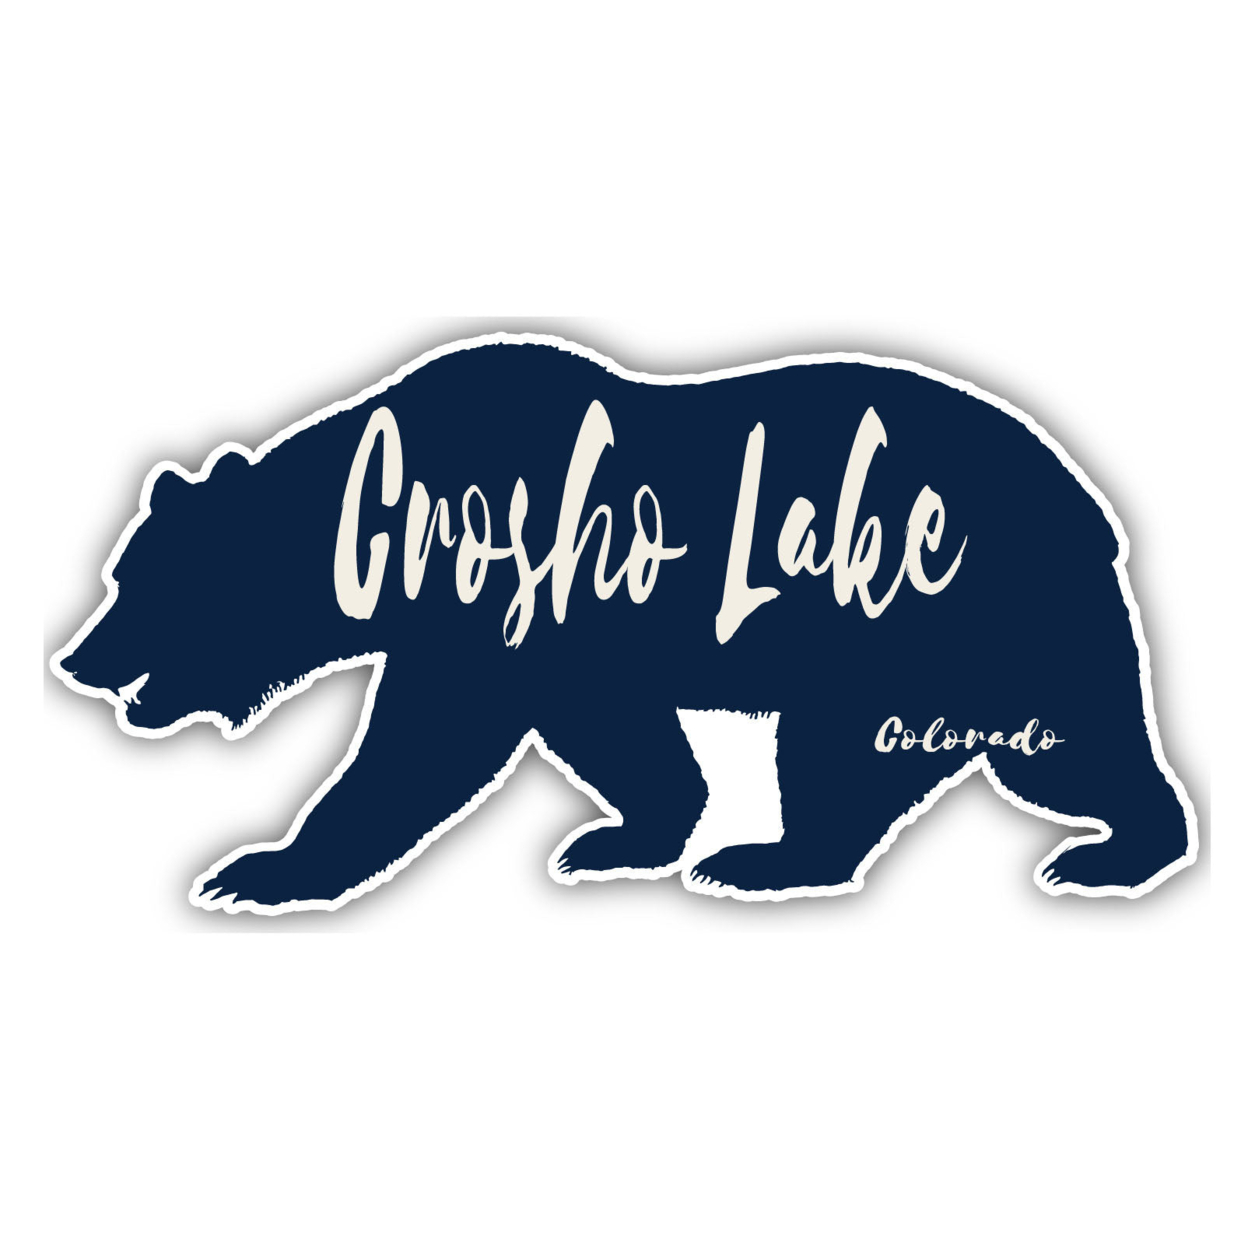 Crosho Lake Colorado Souvenir Decorative Stickers (Choose Theme And Size) - Single Unit, 12-Inch, Bear